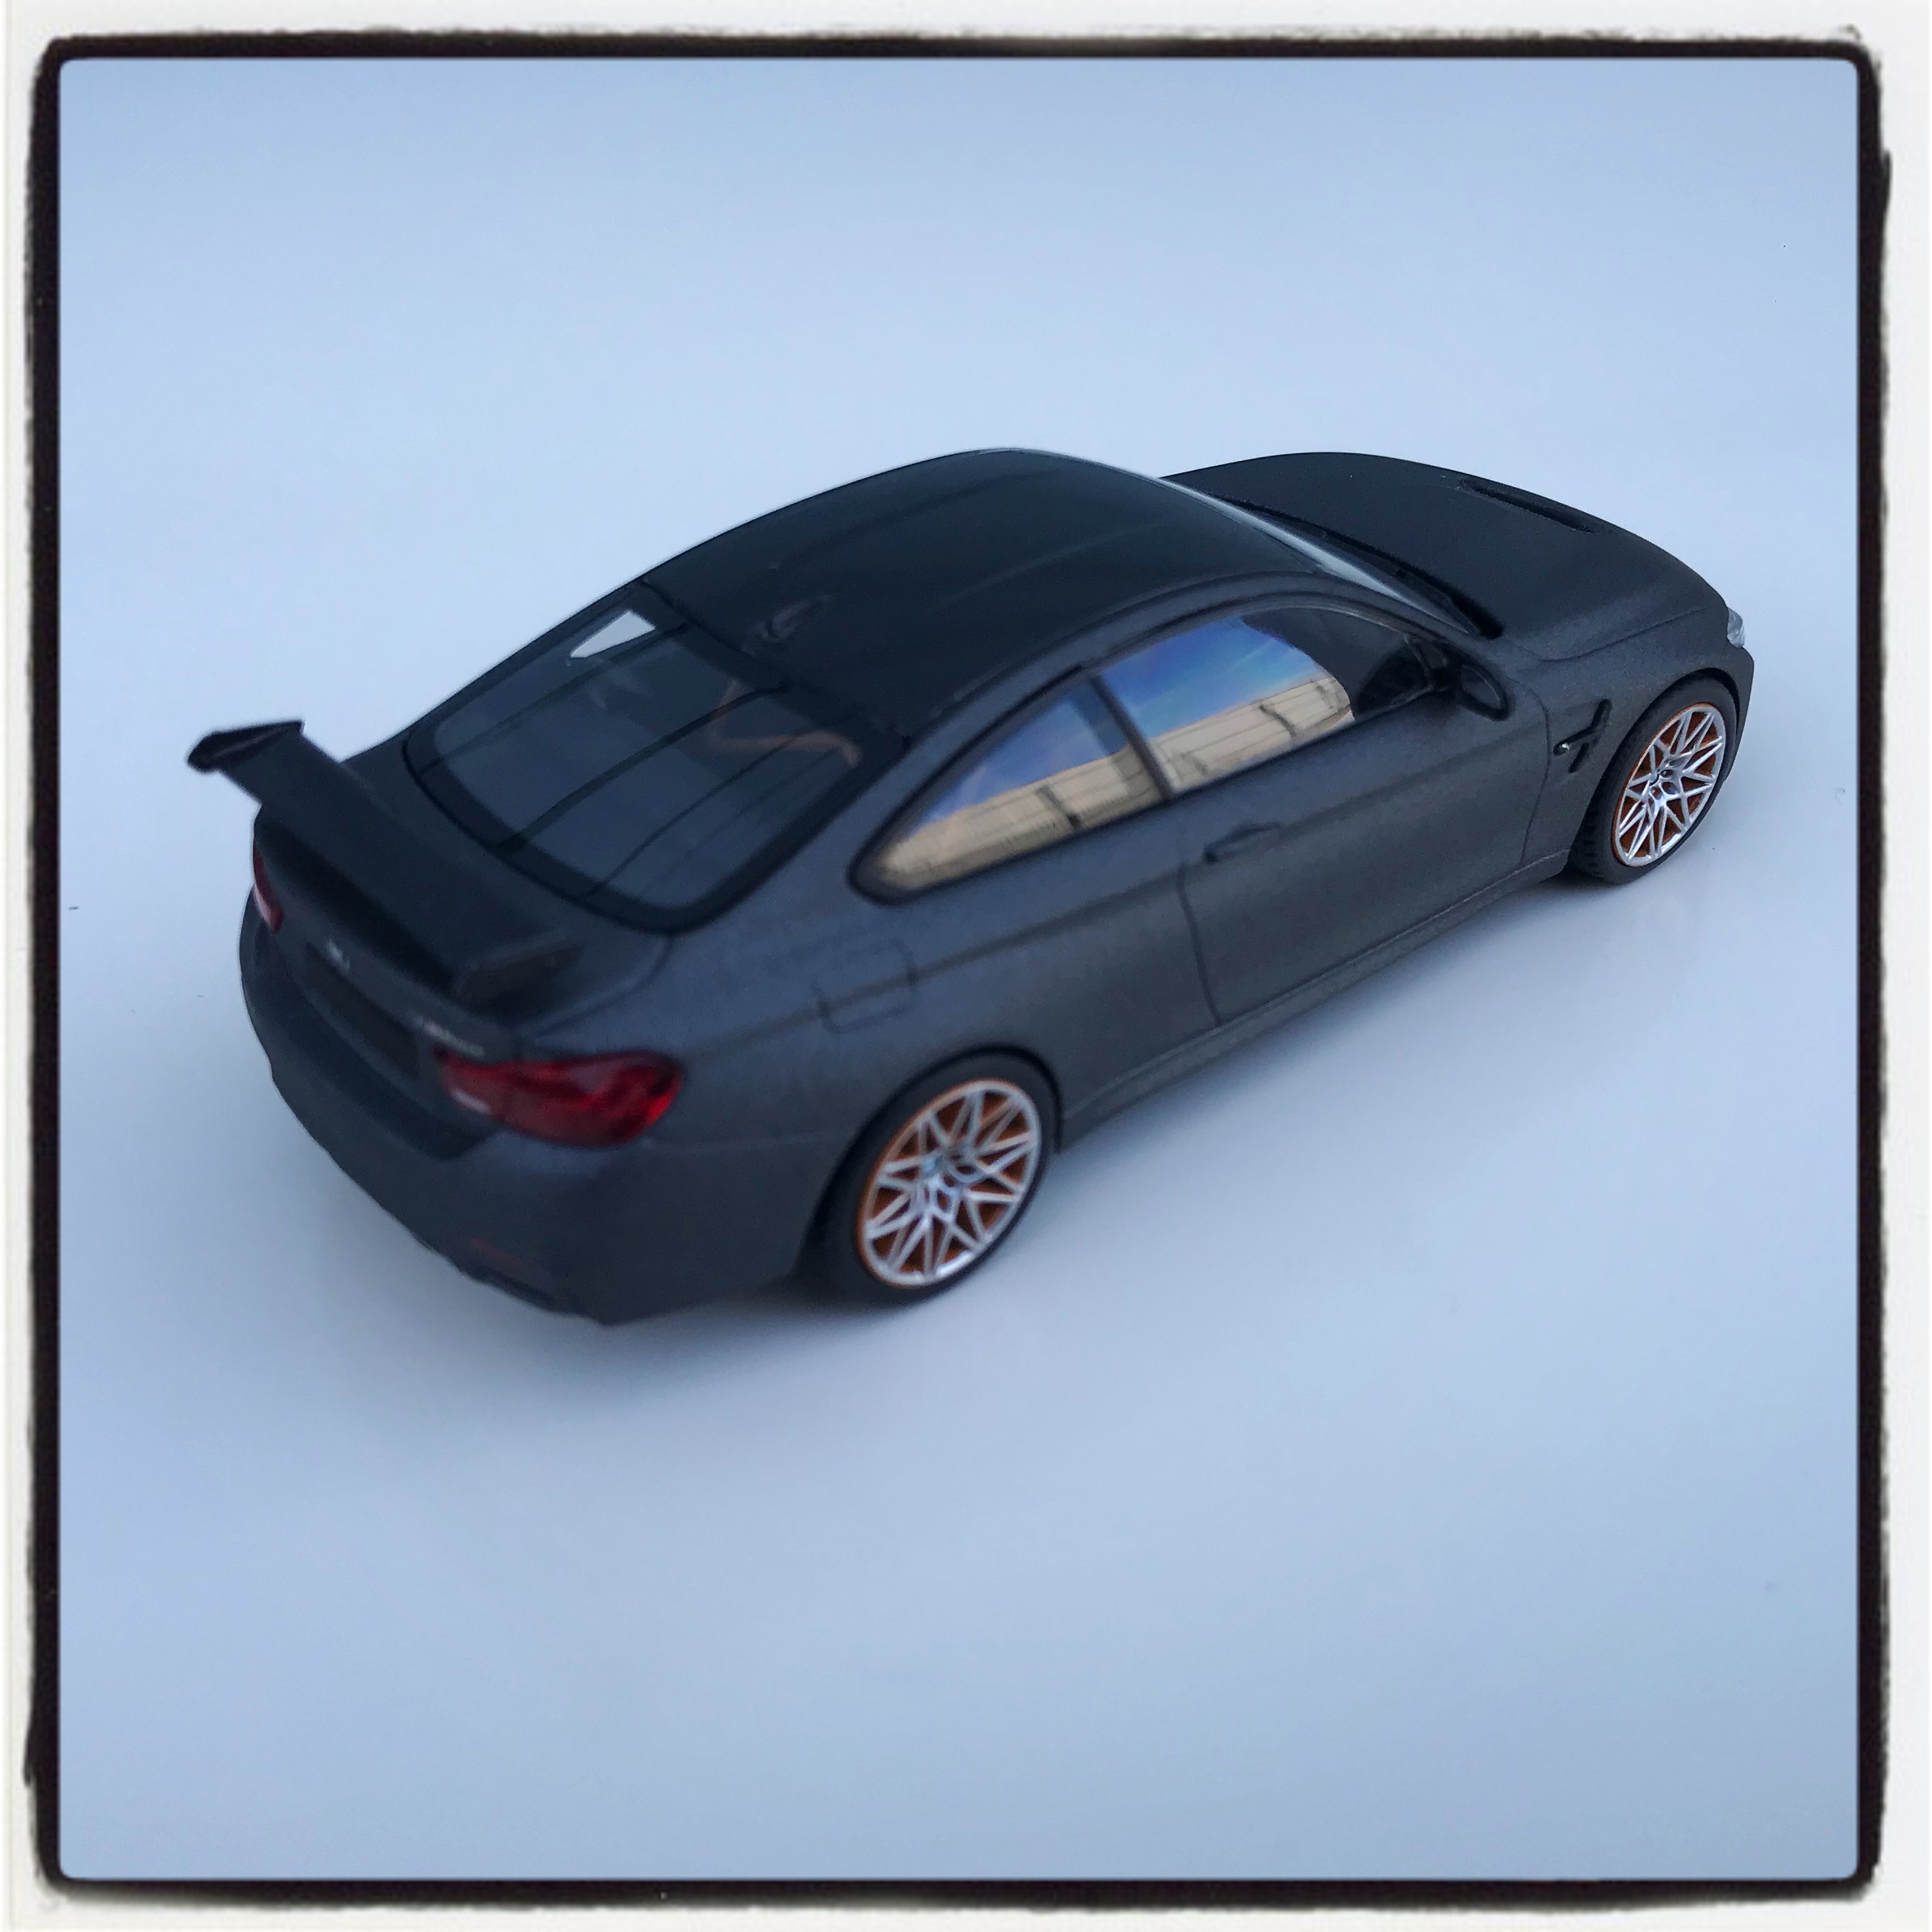 BMW M4 GTS (F82) frozen dark grey with orange wheels, le 1 of 1,008 pcs. (minichamps)